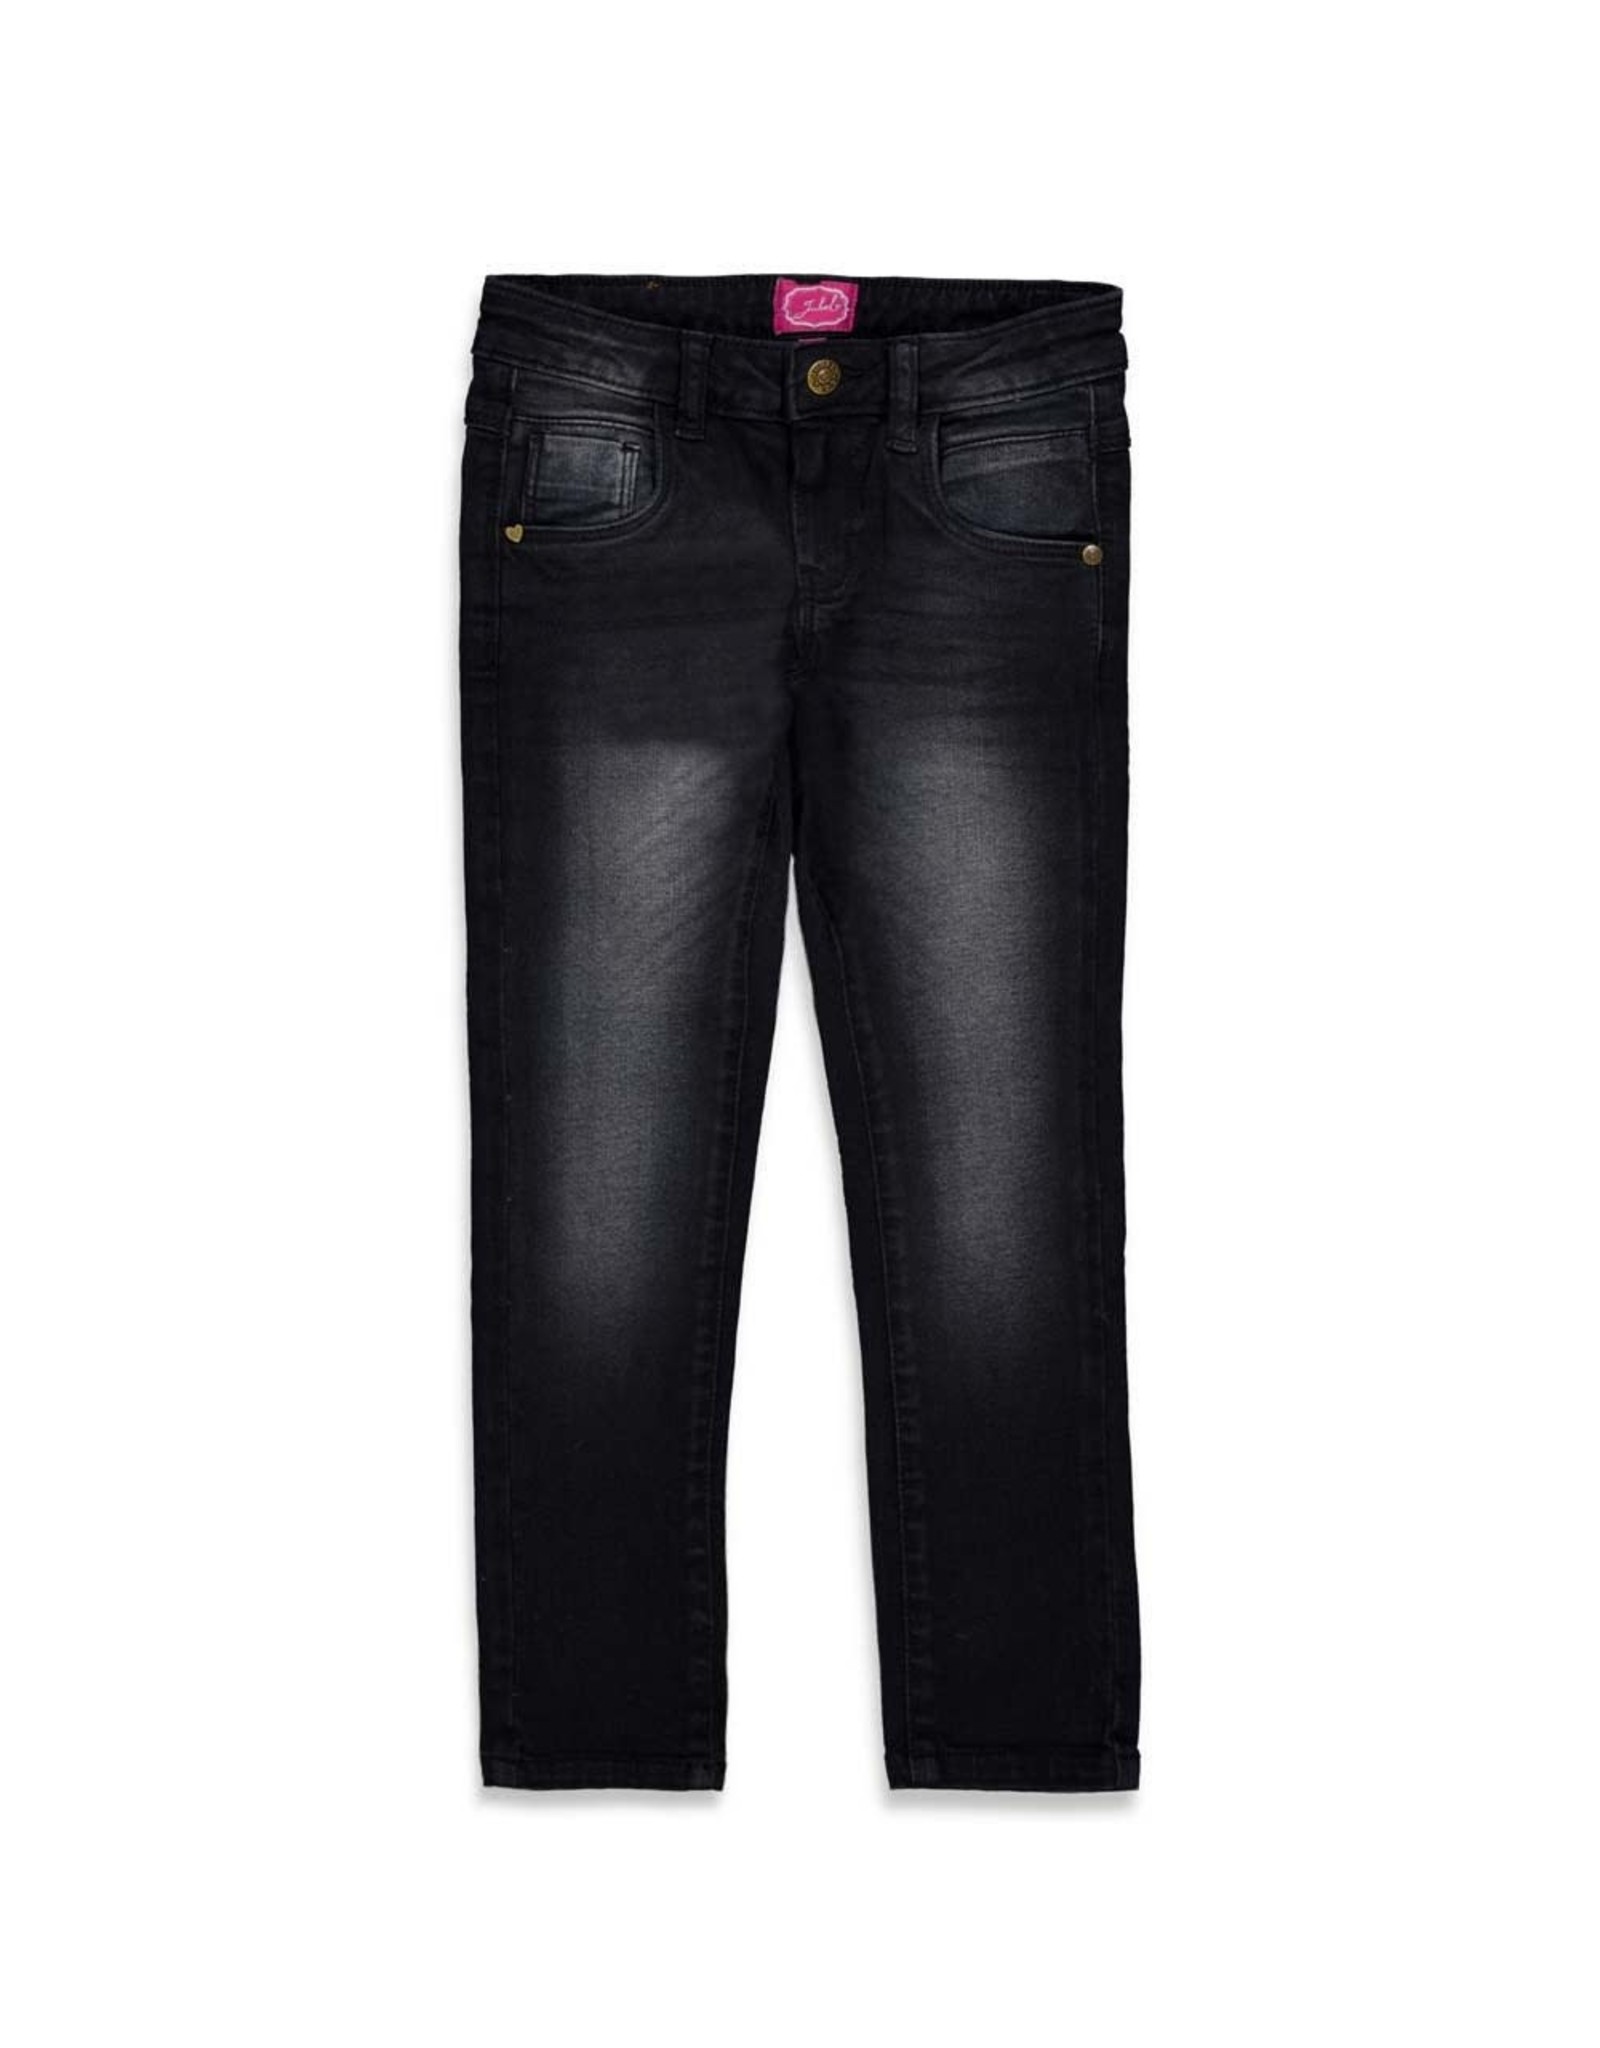 Jubel Skinny jeans - Jubel Denim Black Denim NOS